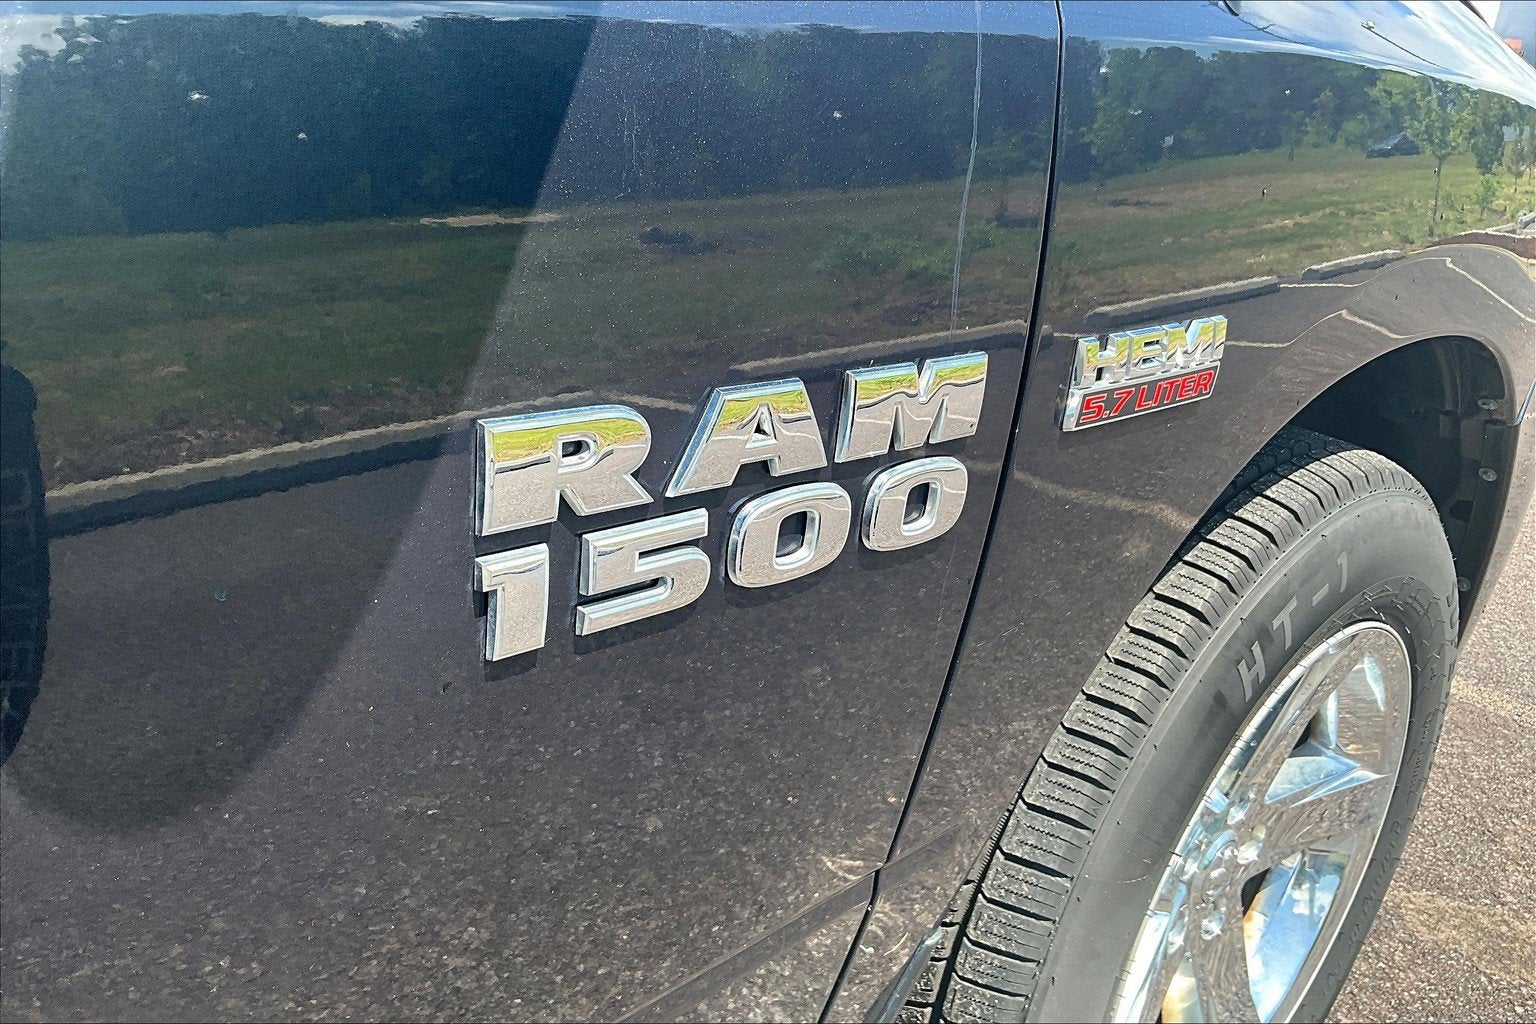 2015 RAM 1500 Express